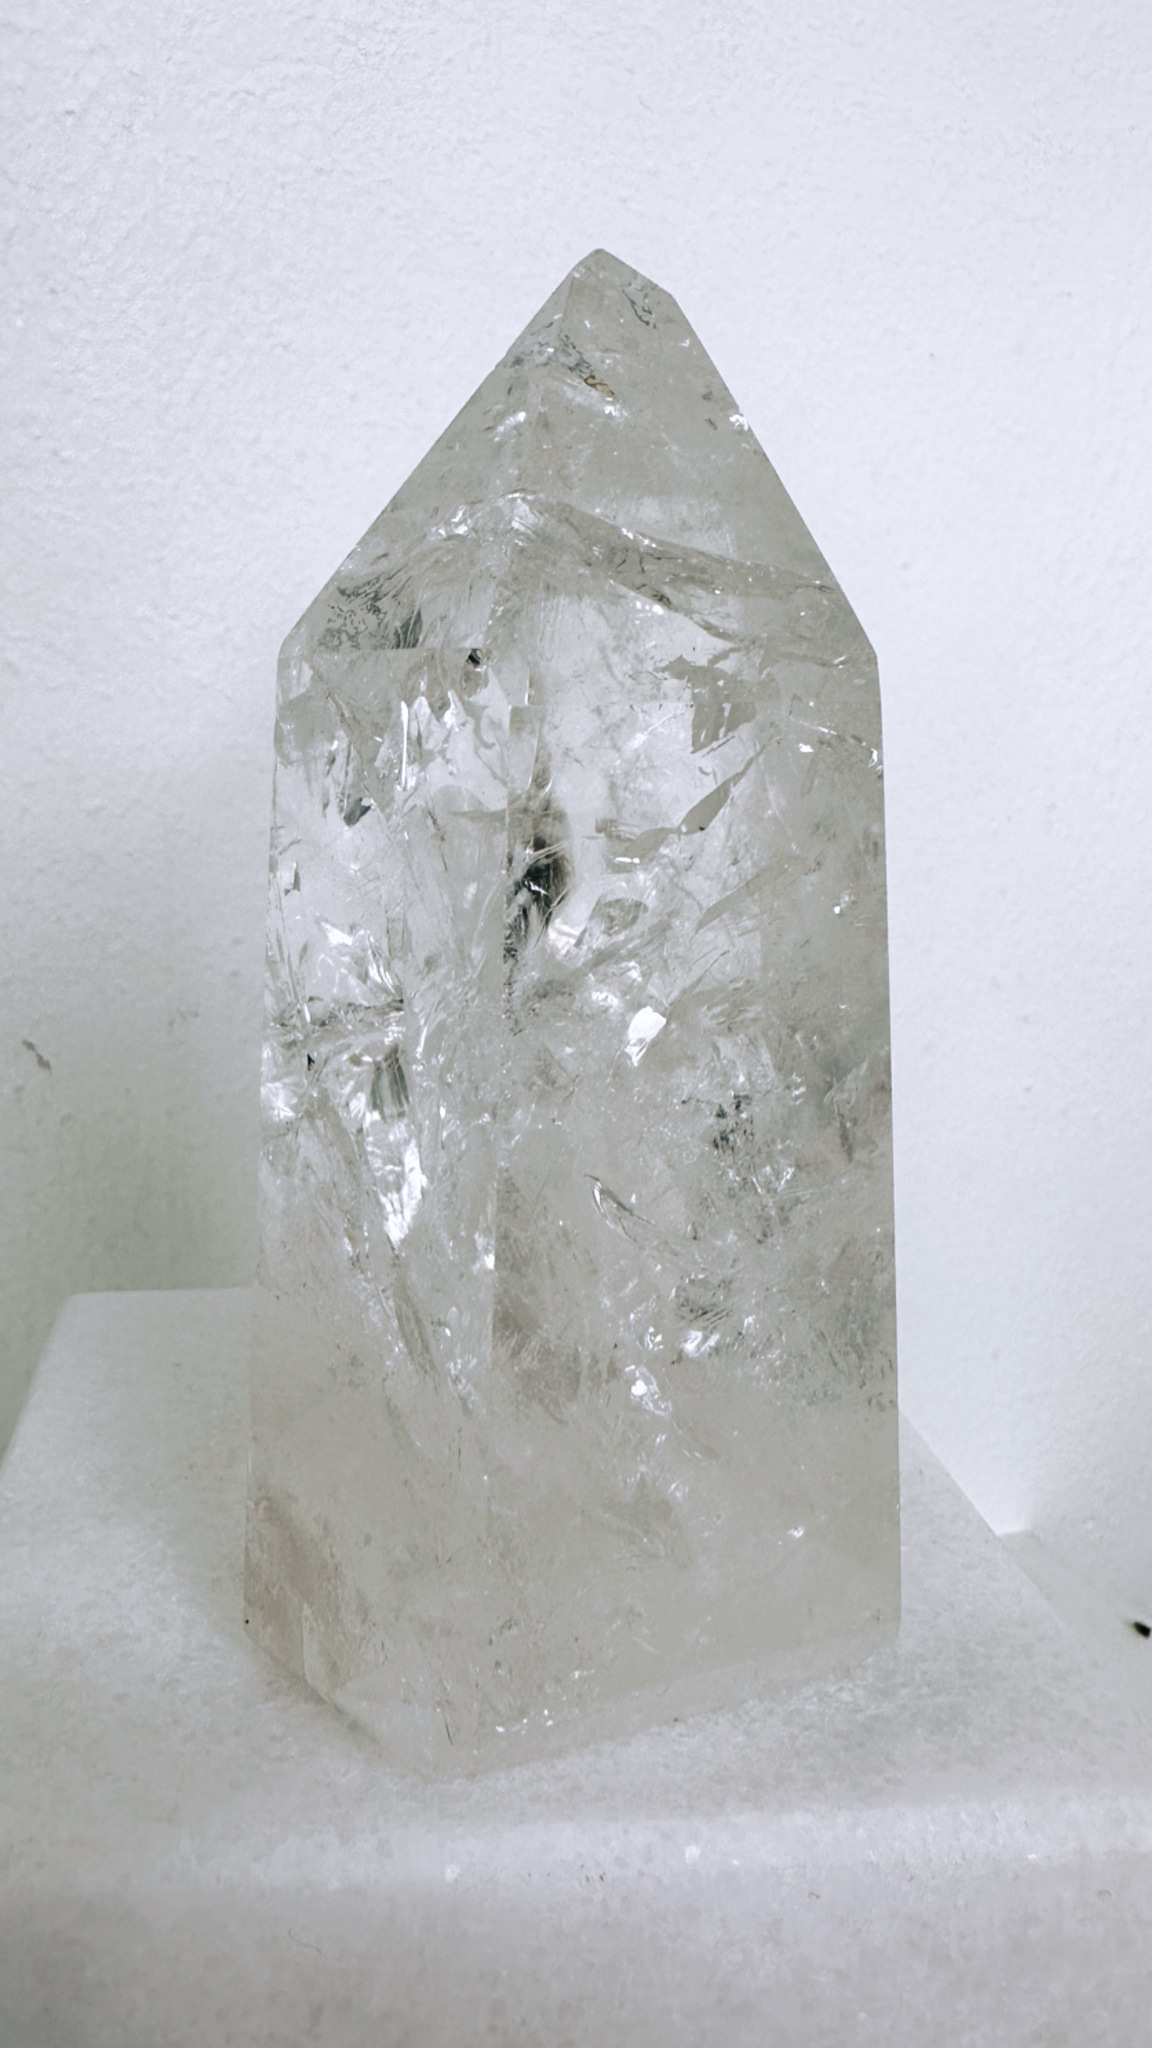 Fire & Ice Bergkristall, torn